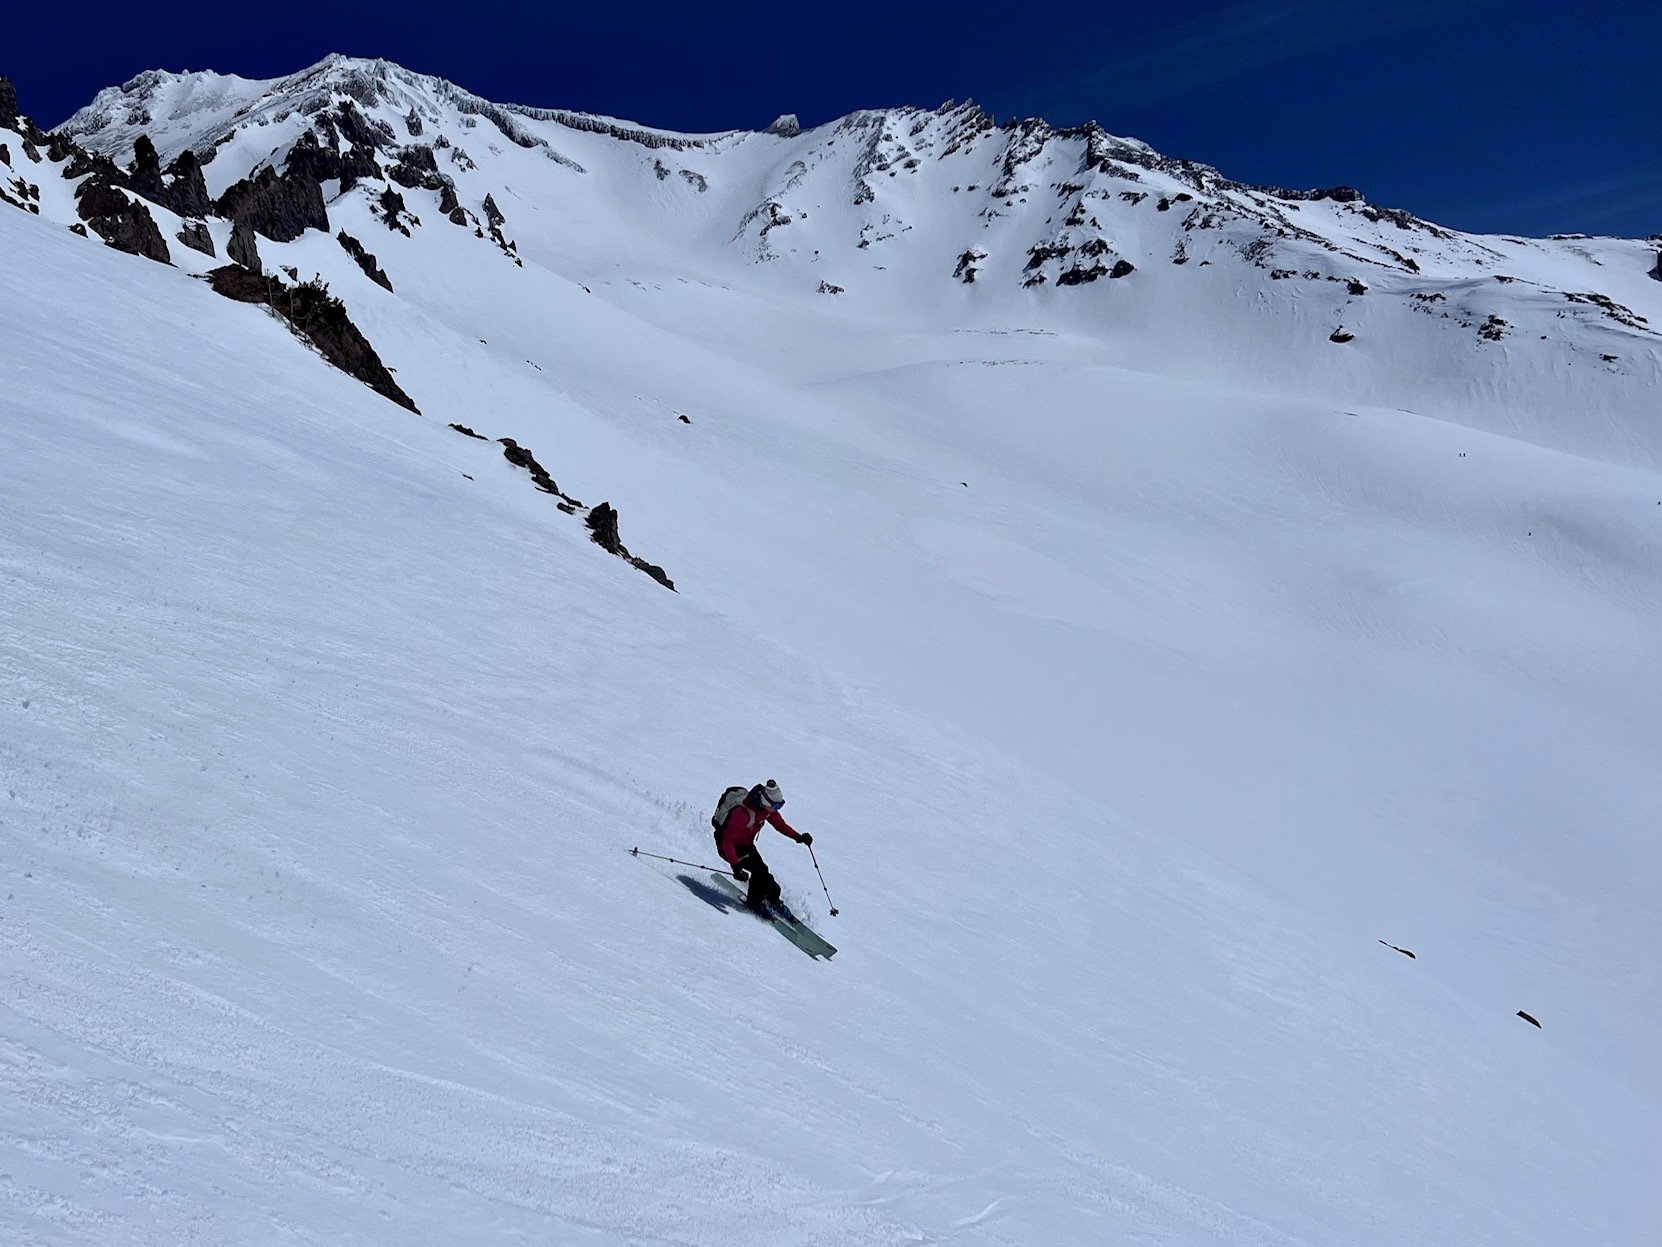 women skiing the slopes of mt shasta